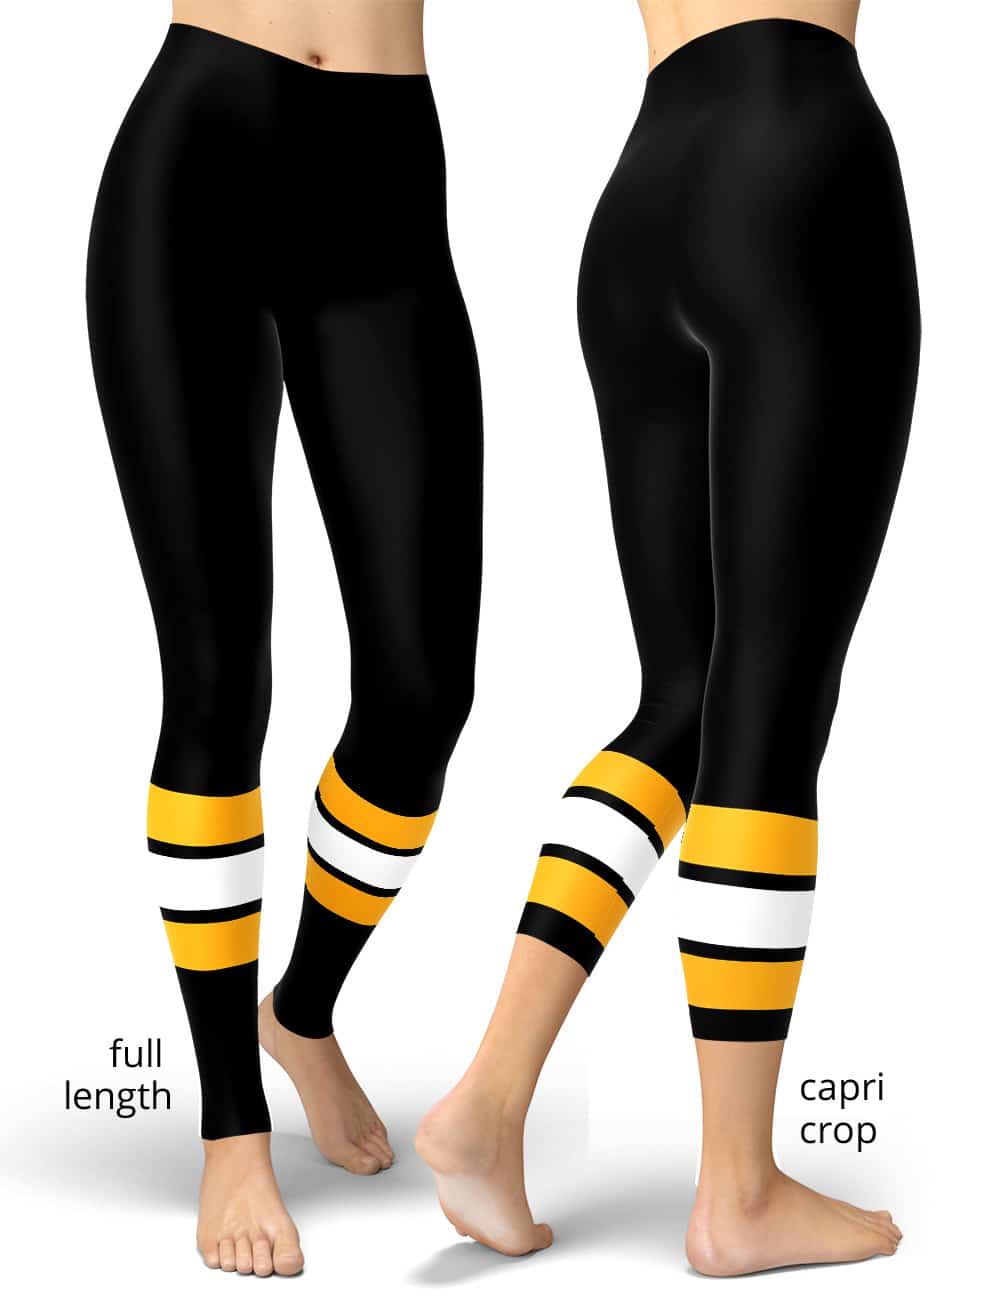 Lids Boston Bruins Concepts Sport Women's Fraction Leggings